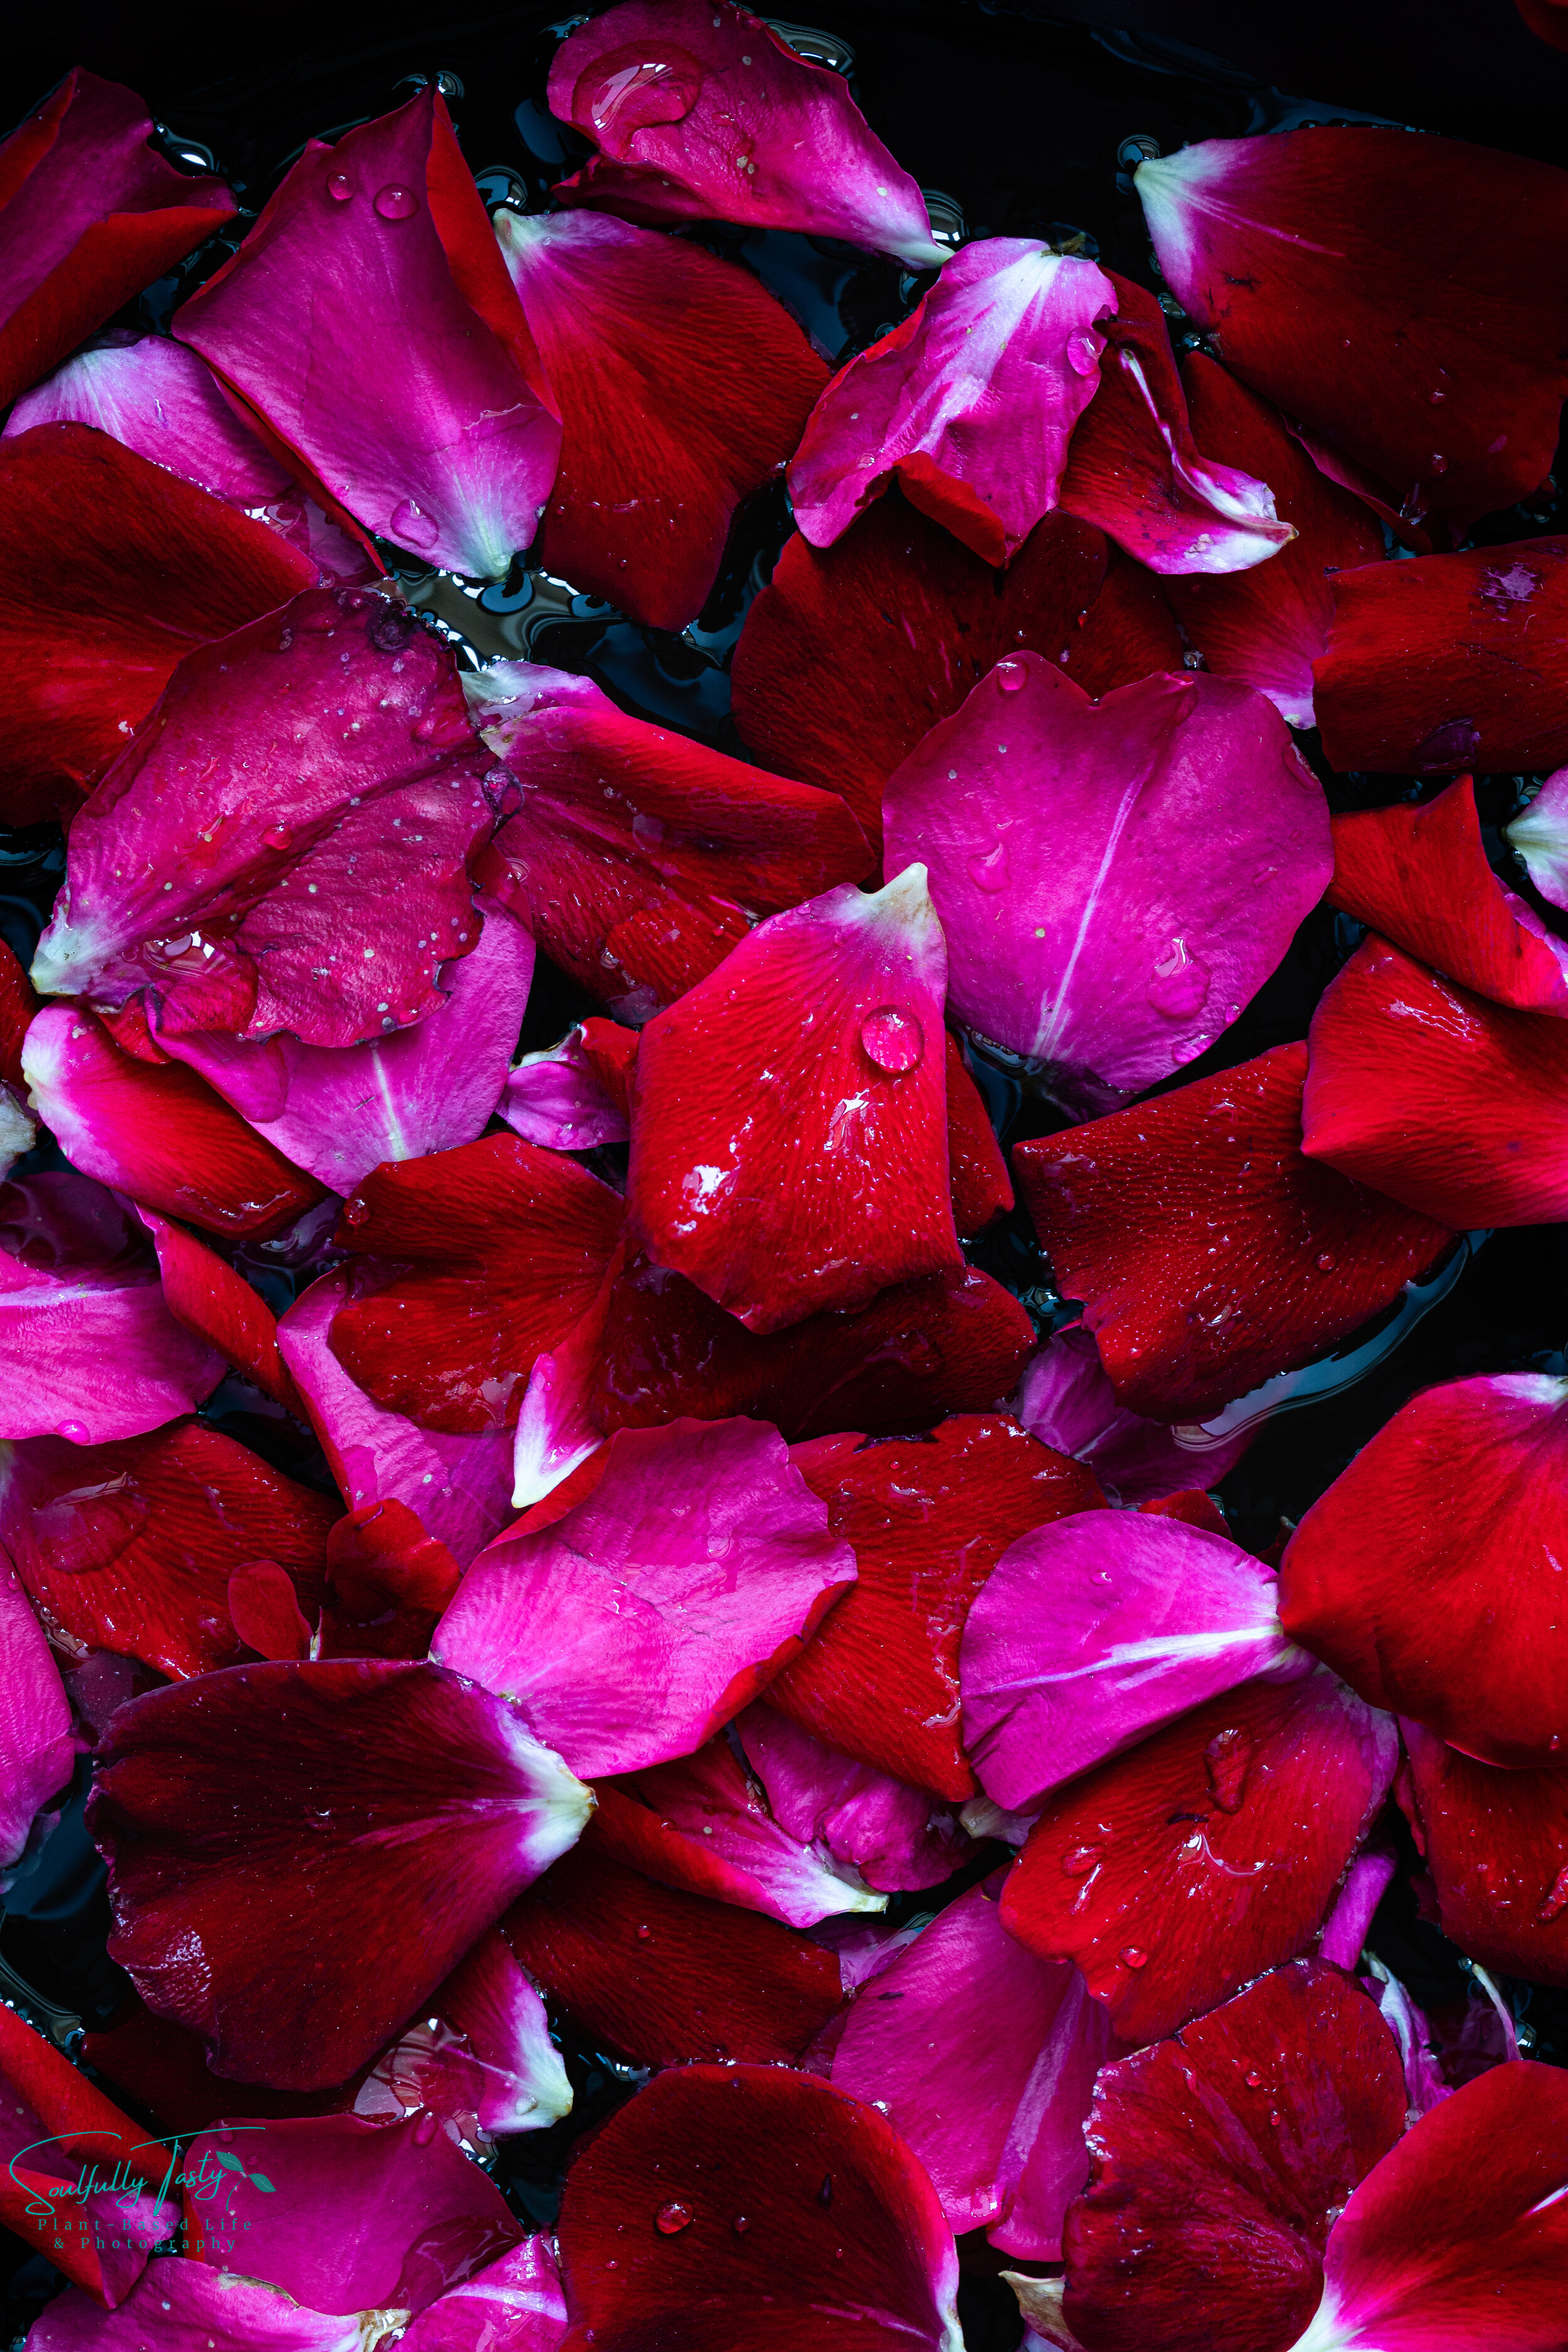 Edible Rose Petals - Saffron and More